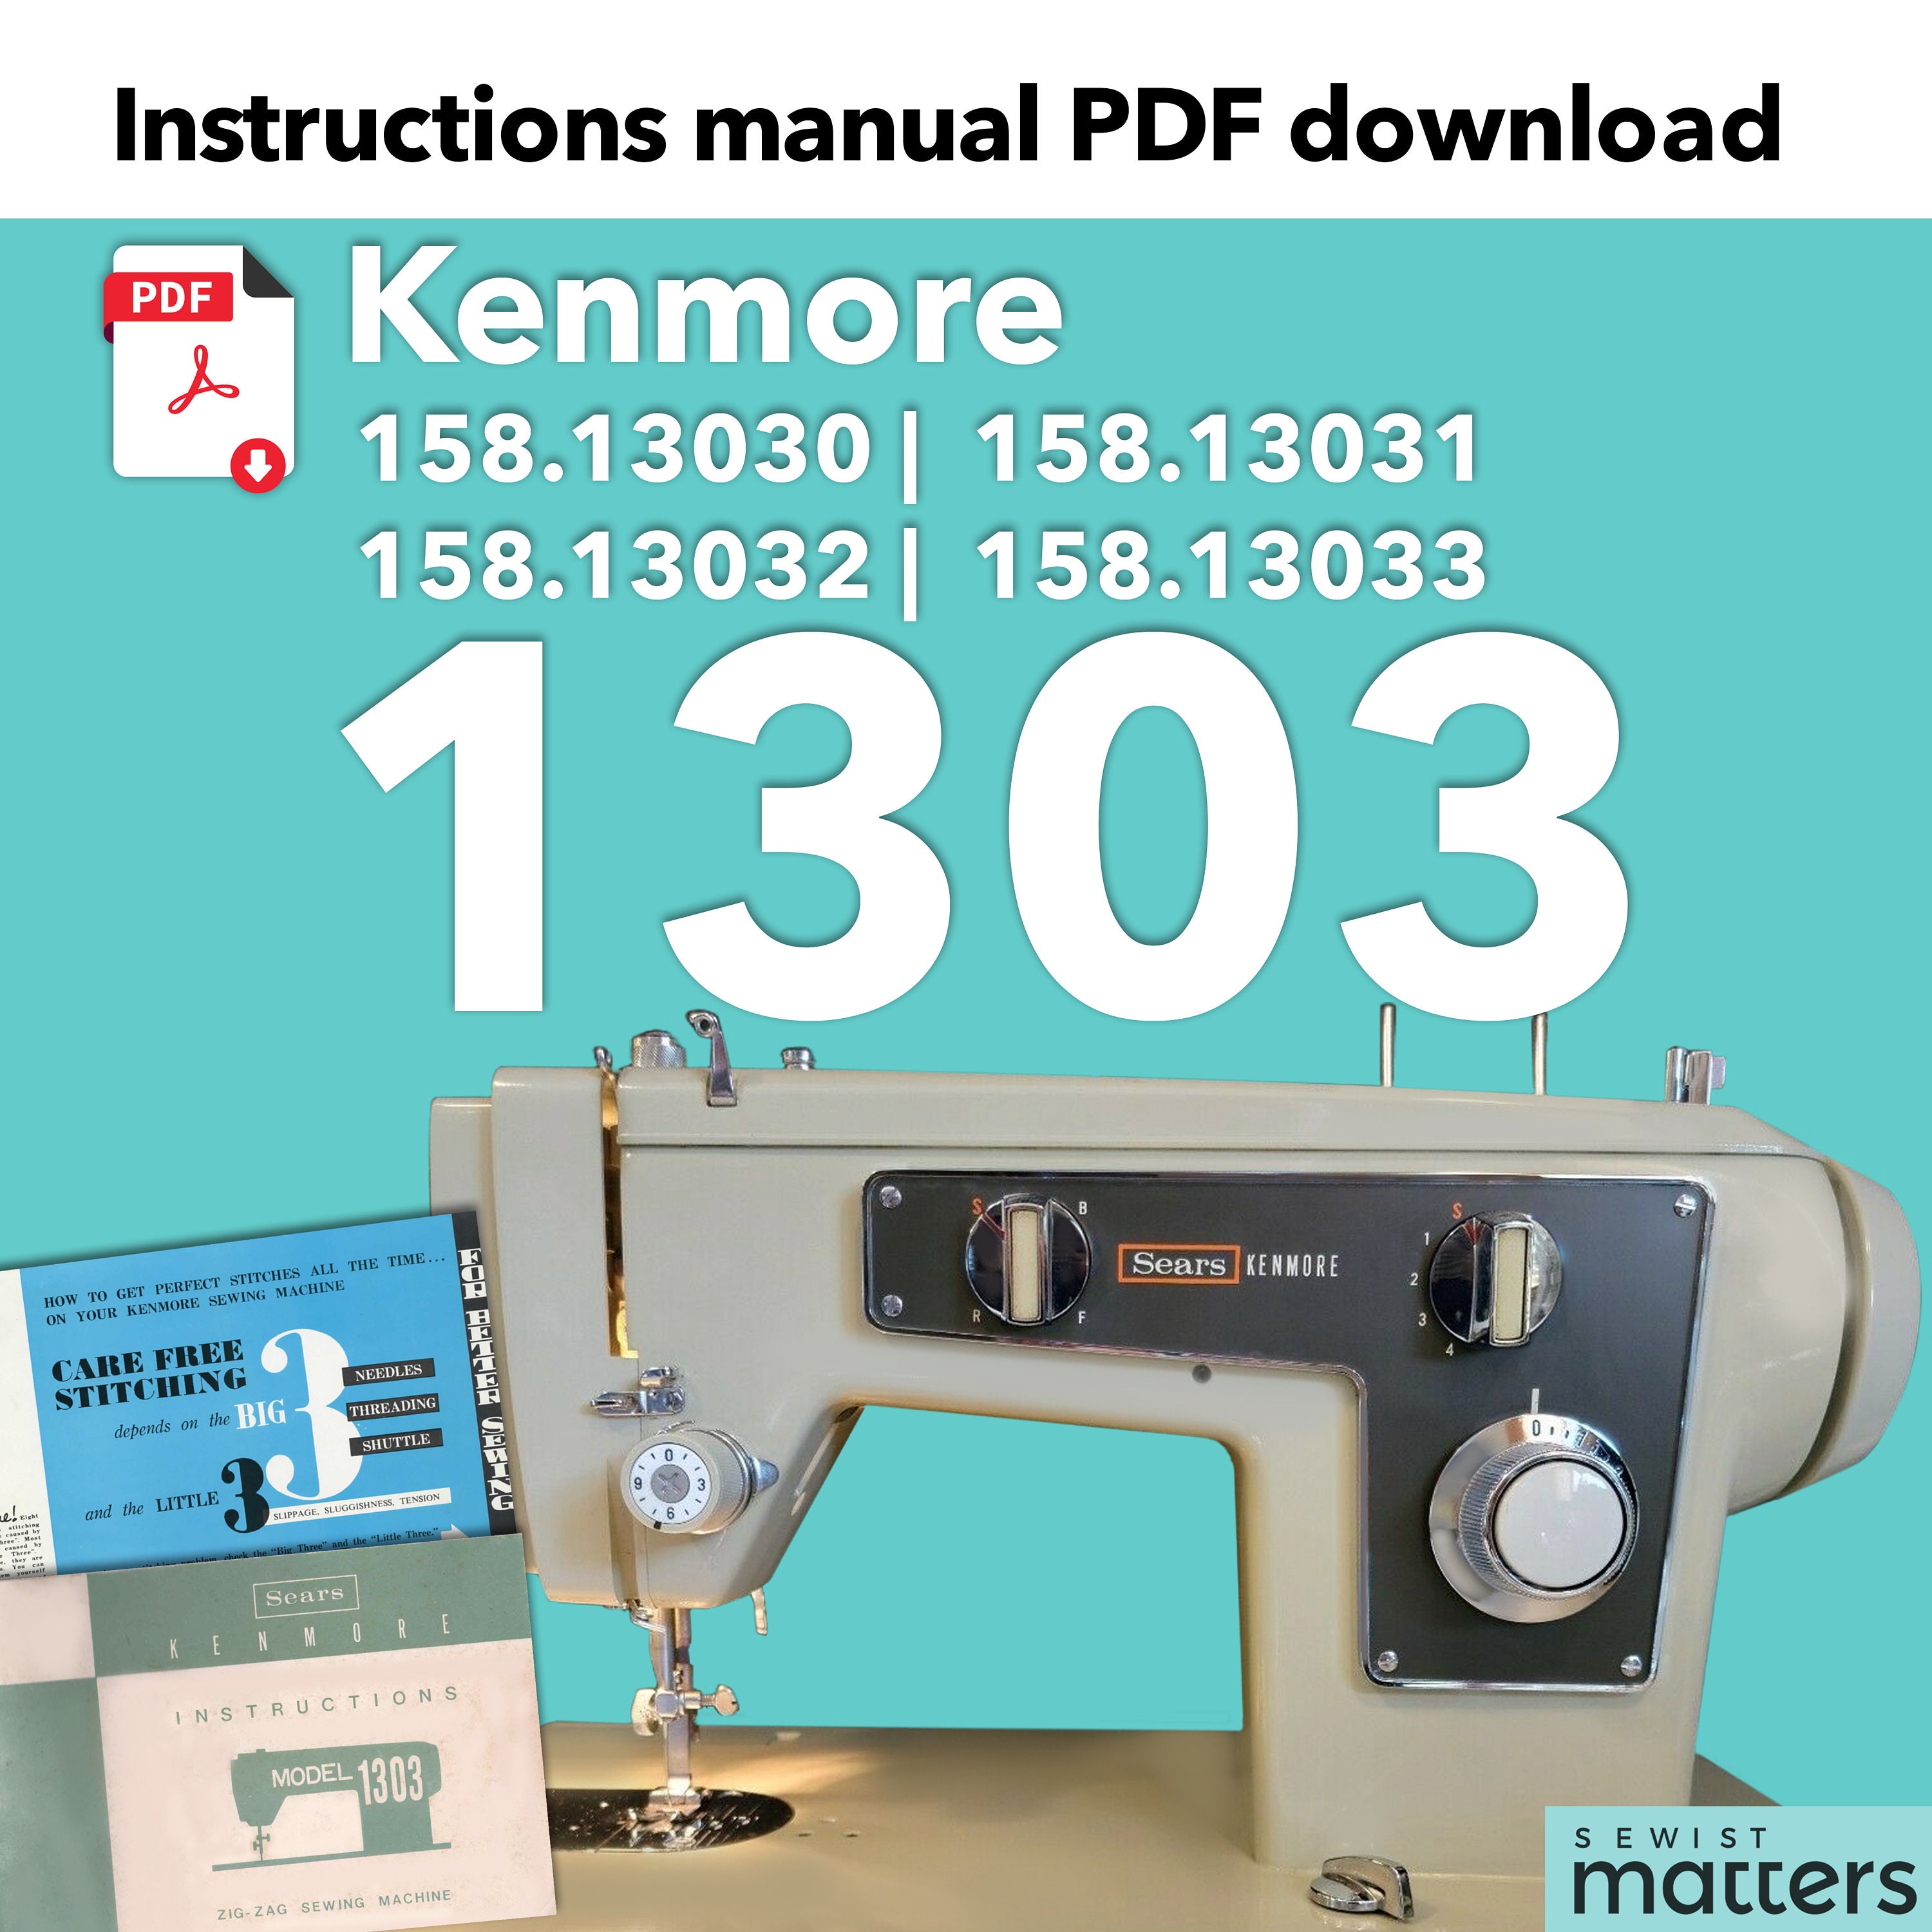 Reclaimed Stitches: Kenmore 158.17800 - super high shank machine